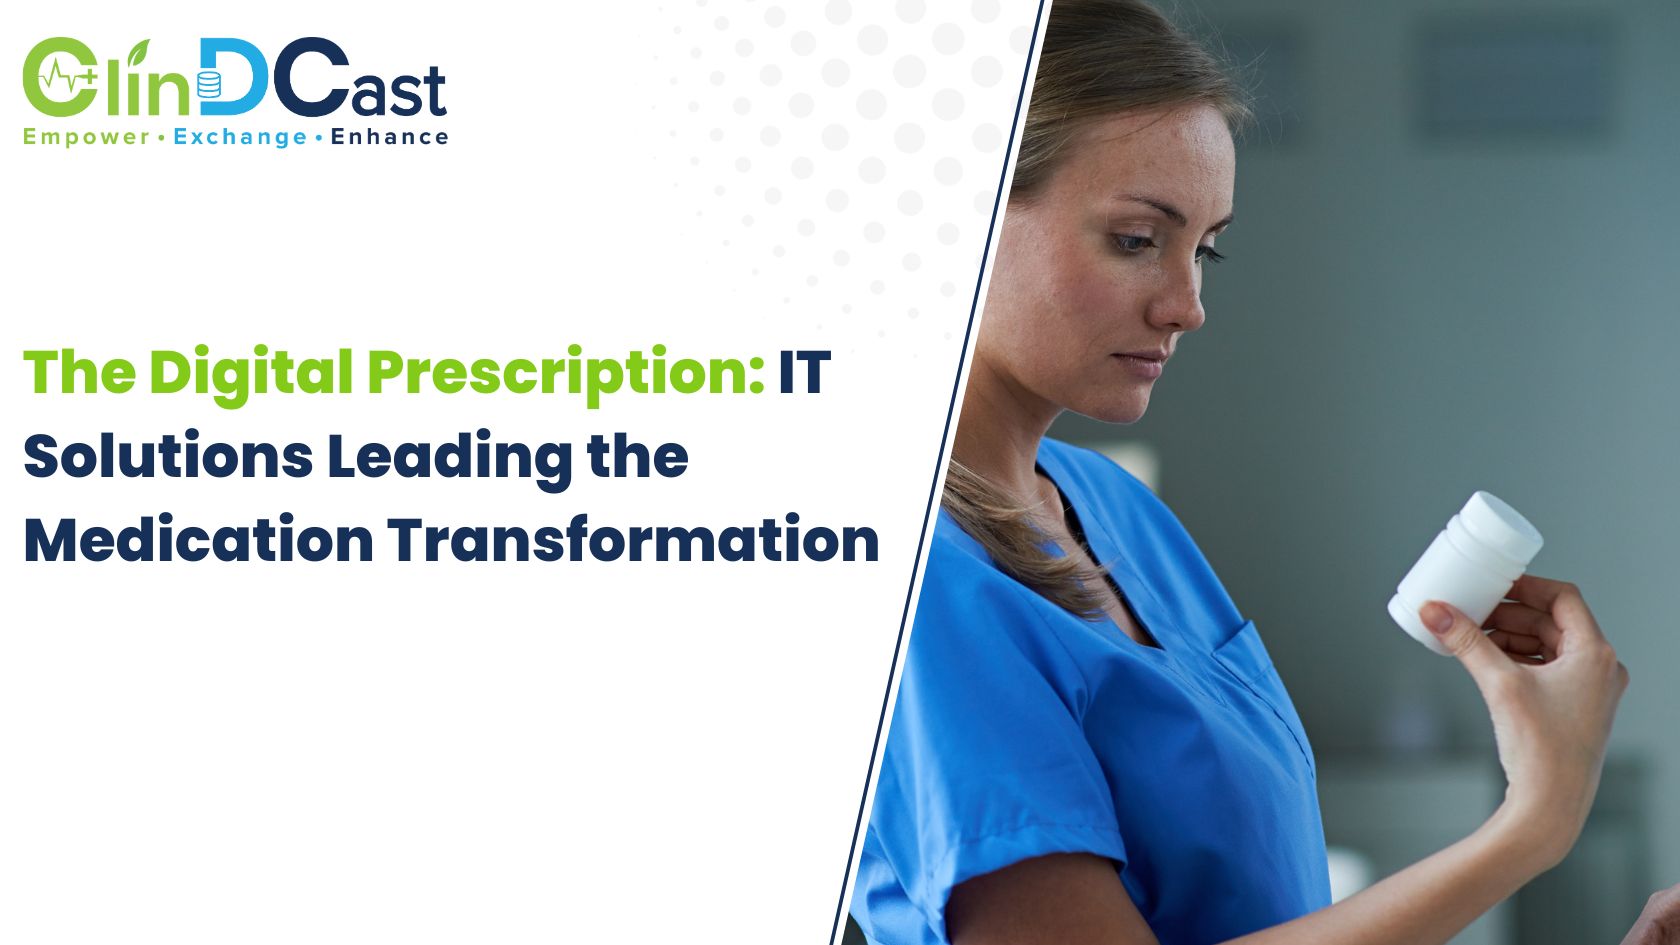 The Digital Prescription: IT Solutions Leading the Medication Transformation